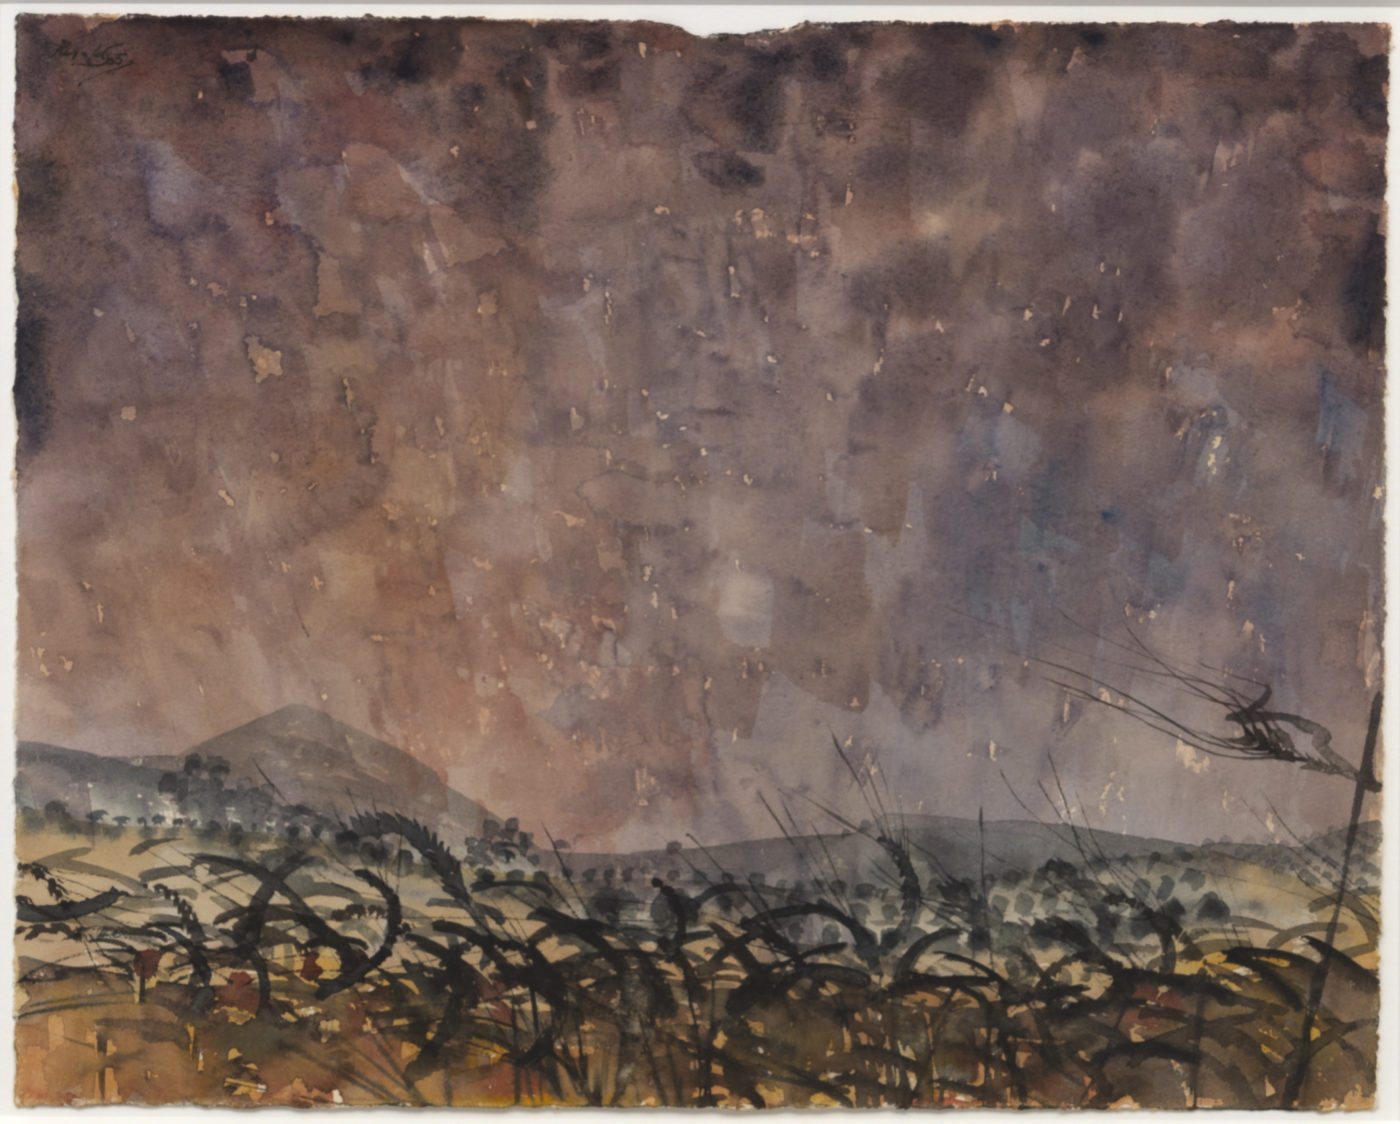 Alan Reynolds (1926-2014), Landscape with a Thorn Hedge